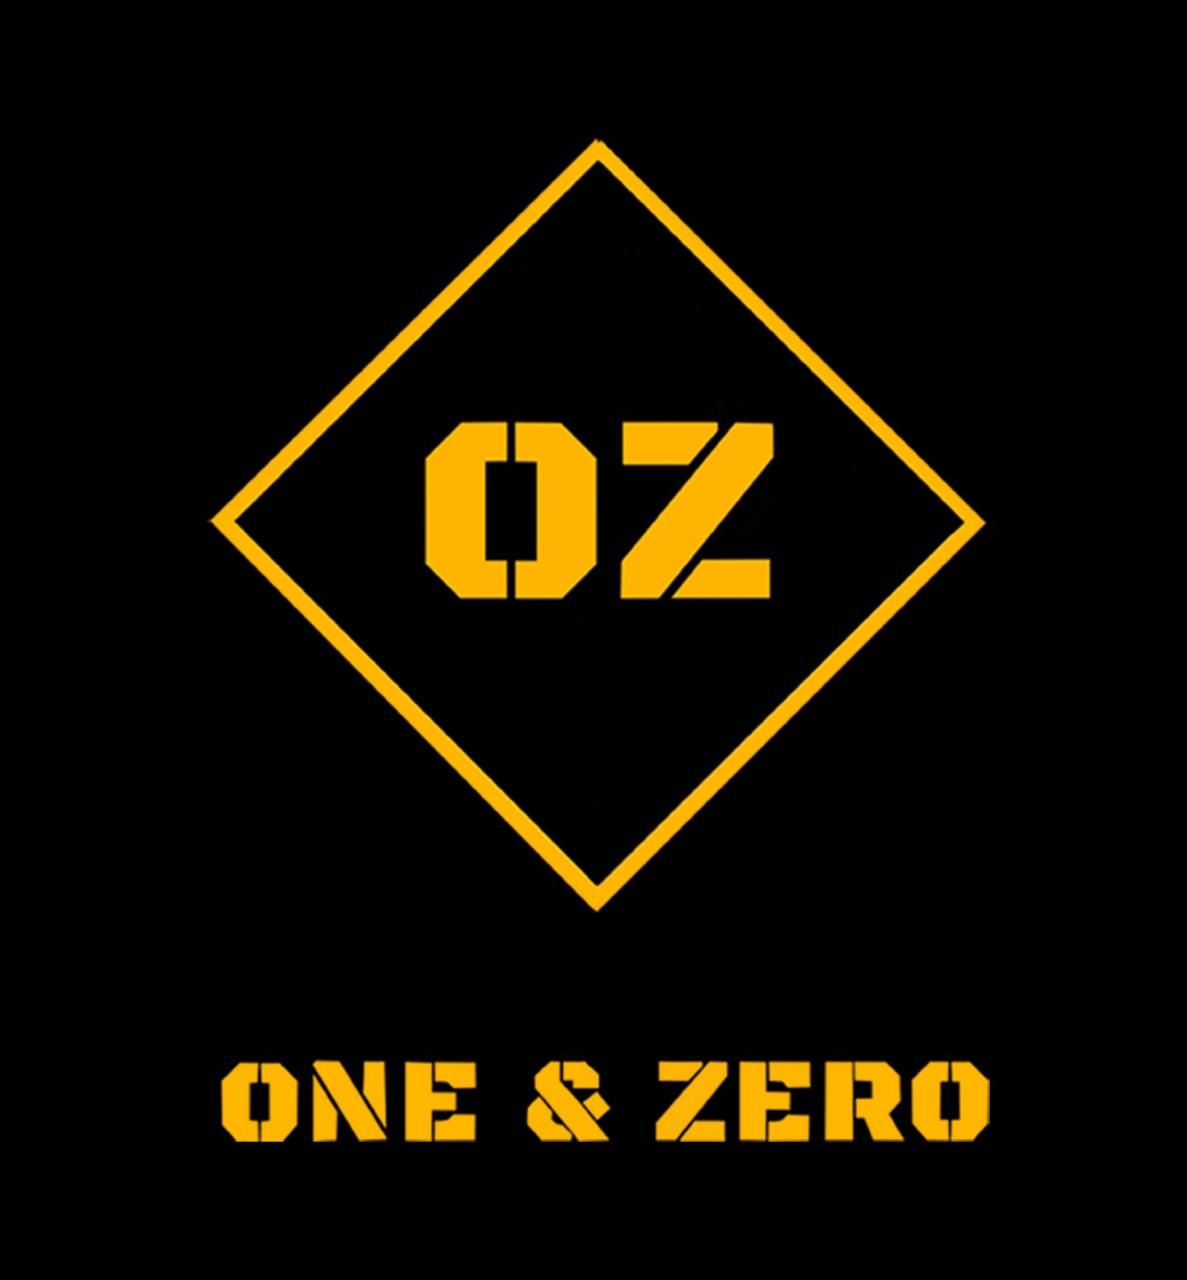 One & Zero  The Marketing Trend